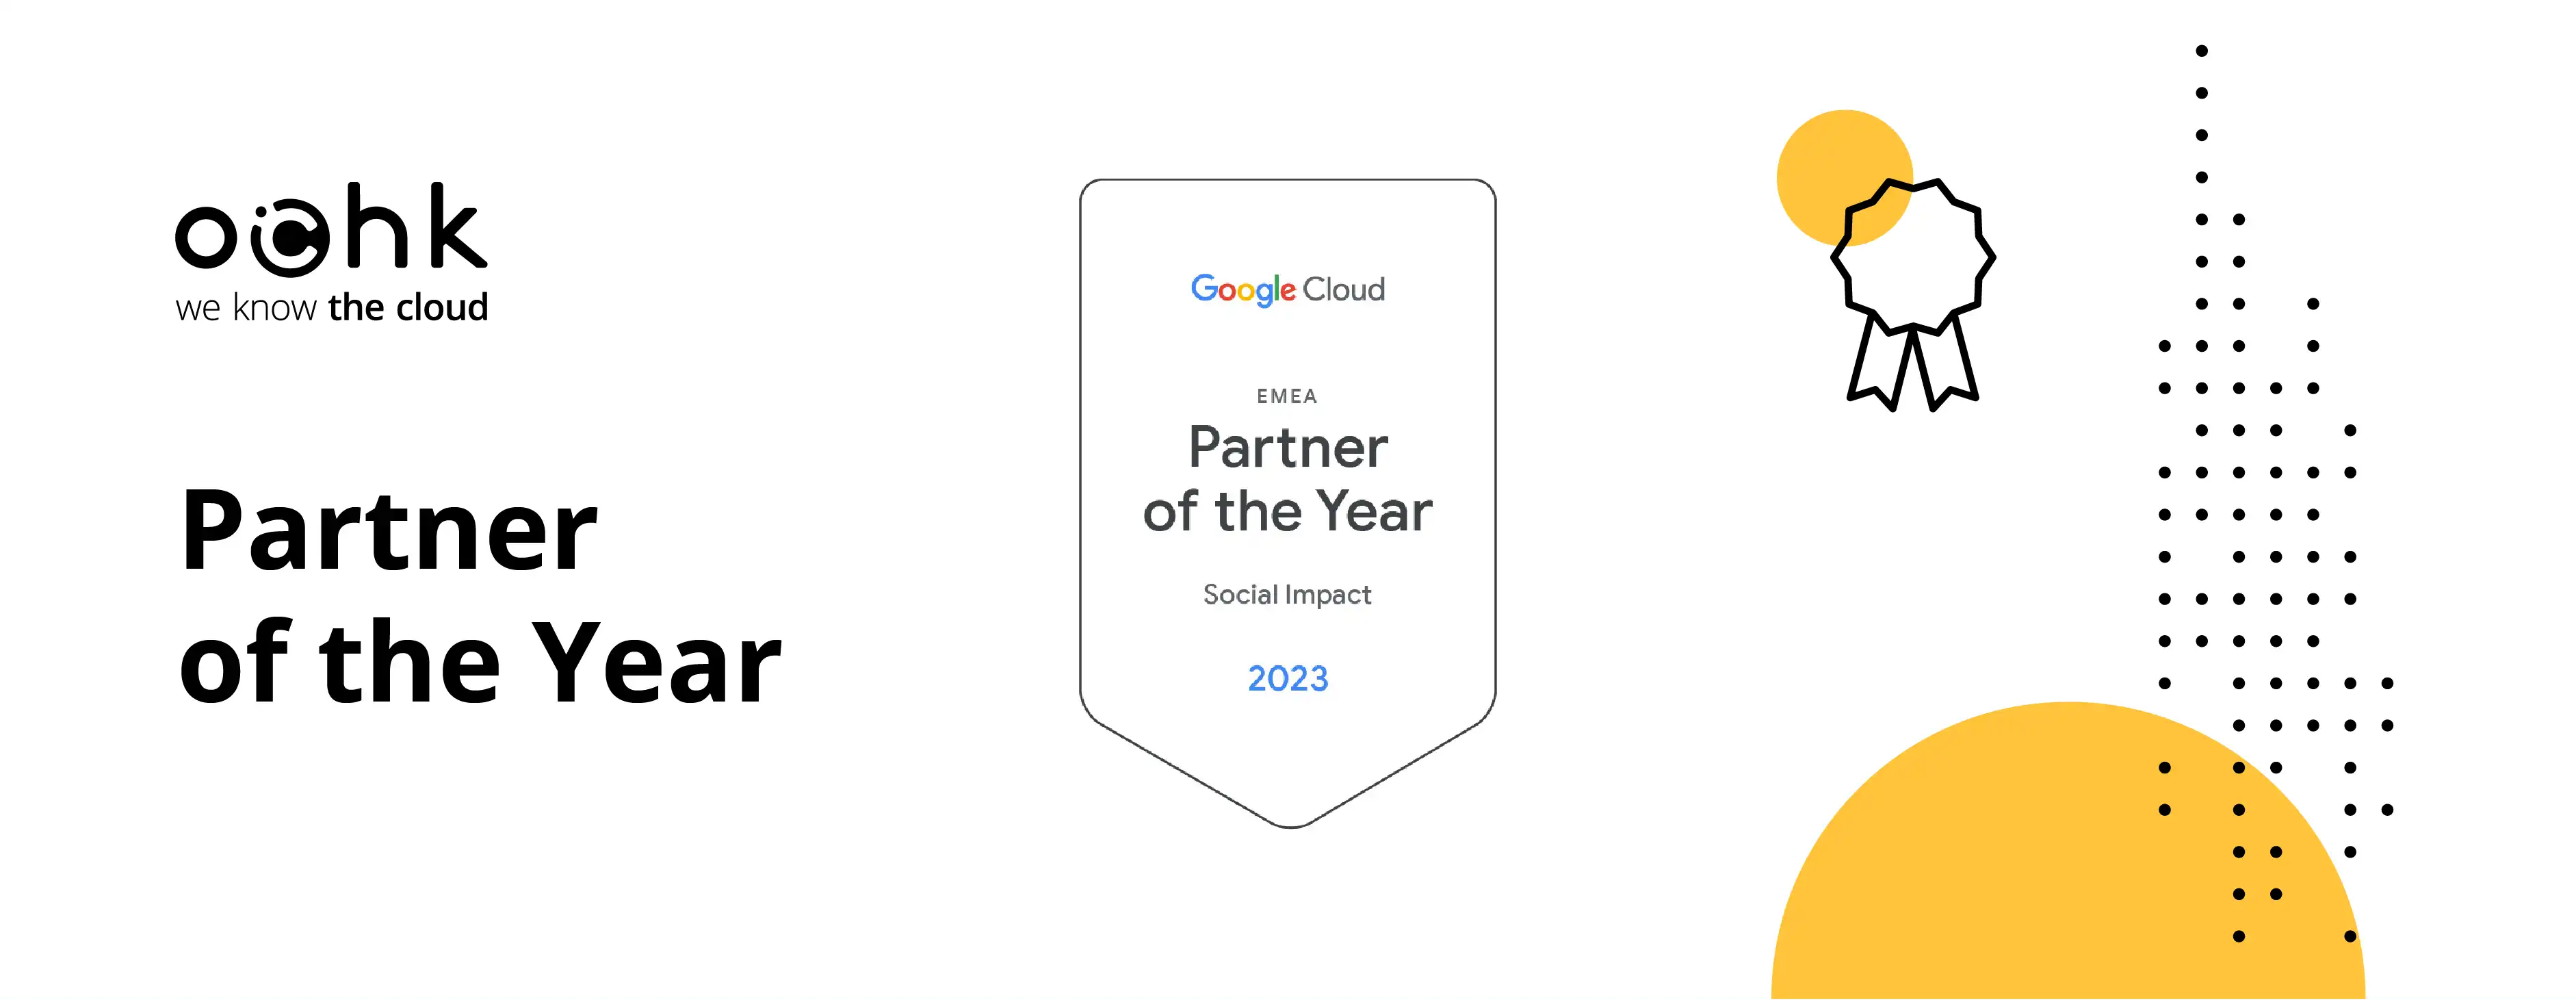 OChK laureatem Google Cloud Partner Awards w regionie EMEA